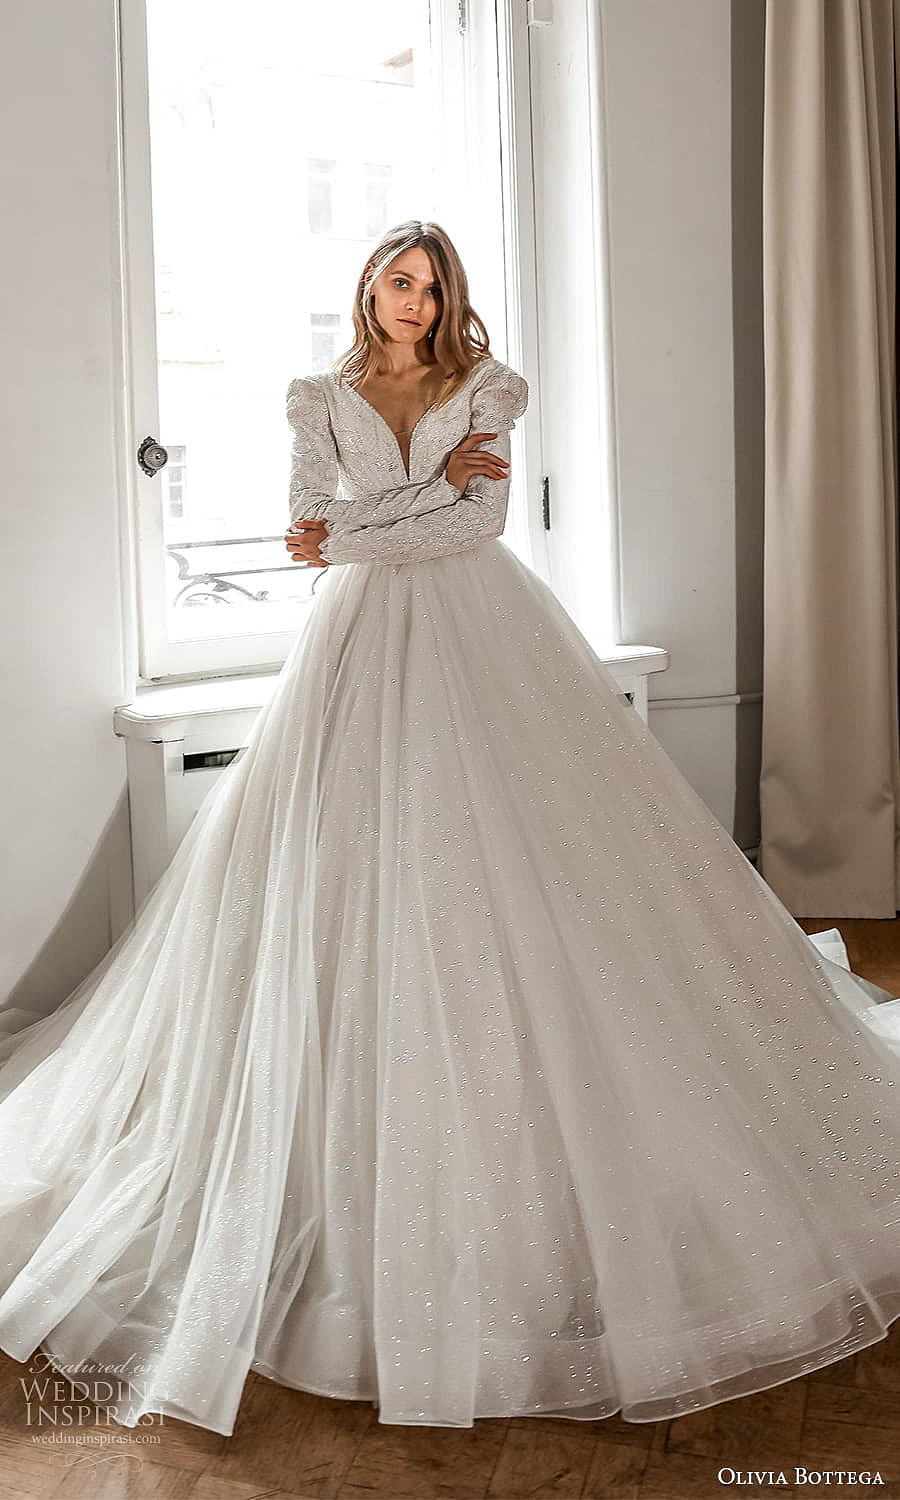 Olivia Bottega Pret-a-Porter 新娘系列 优雅百搭新娘嫁衣 - 41